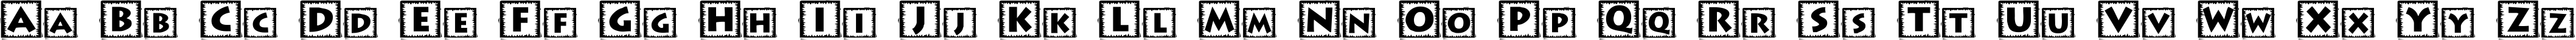 Пример написания английского алфавита шрифтом Taco Box